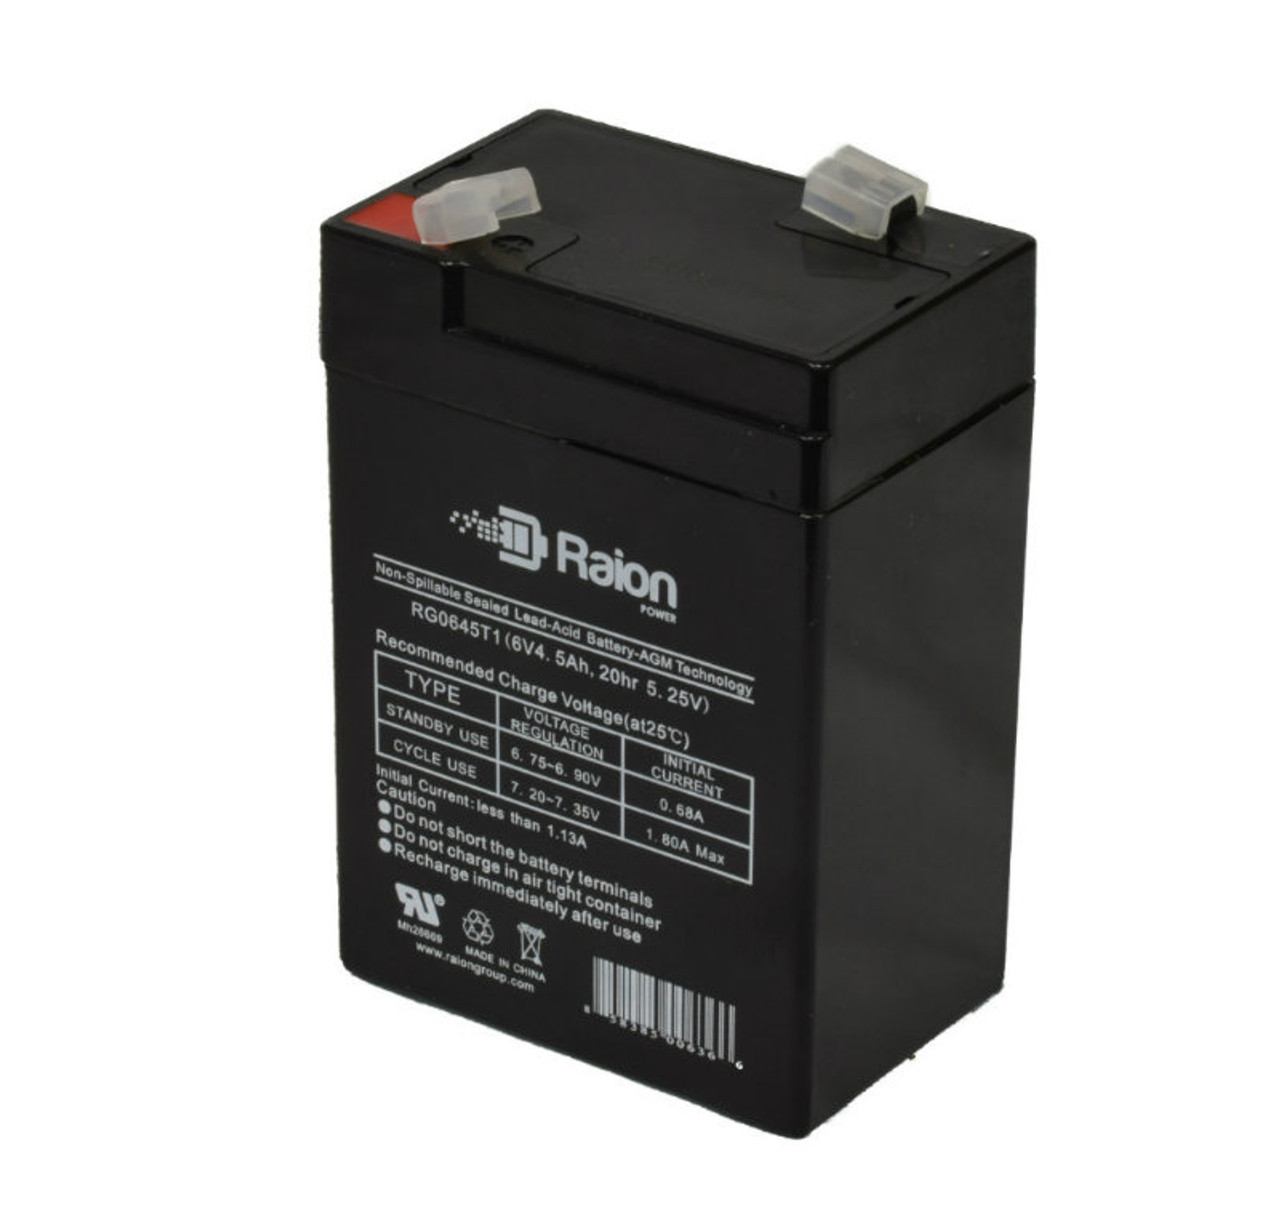 Raion Power RG0645T1 6V 4.5Ah Replacement Battery Cartridge for Kid Trax KT1268WMC Minnie Mouse Car